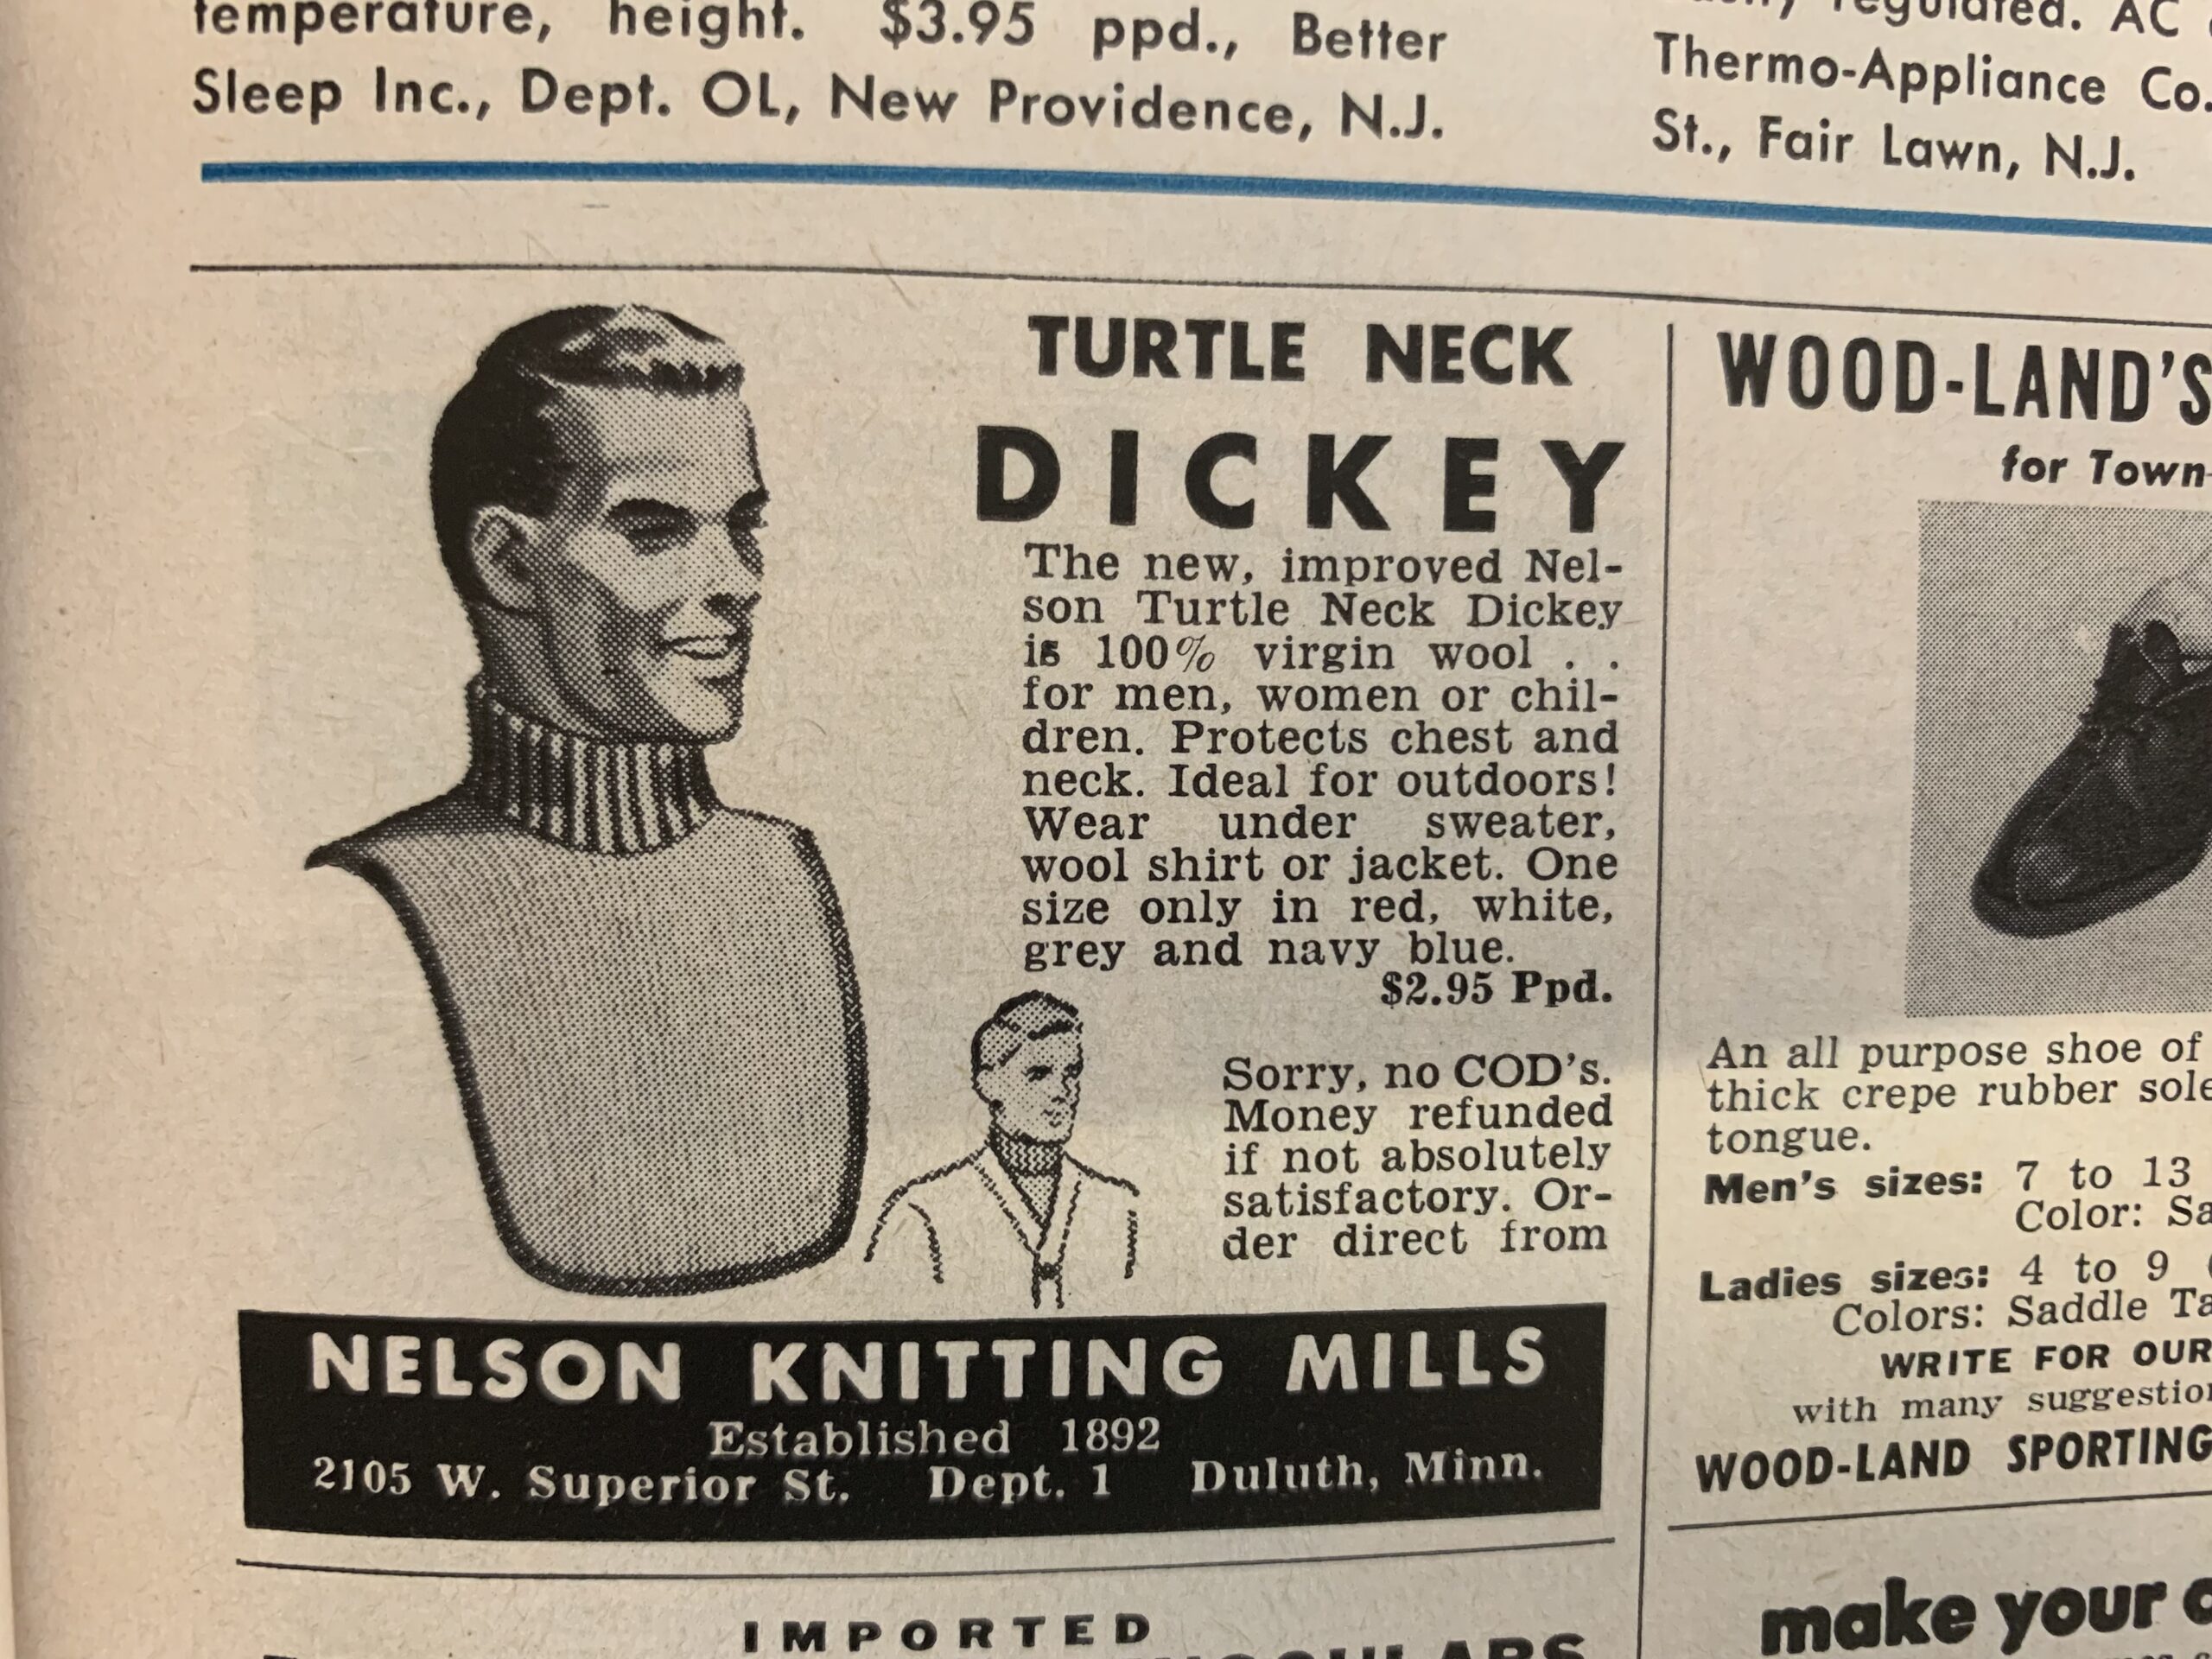 The turtleneck dickey